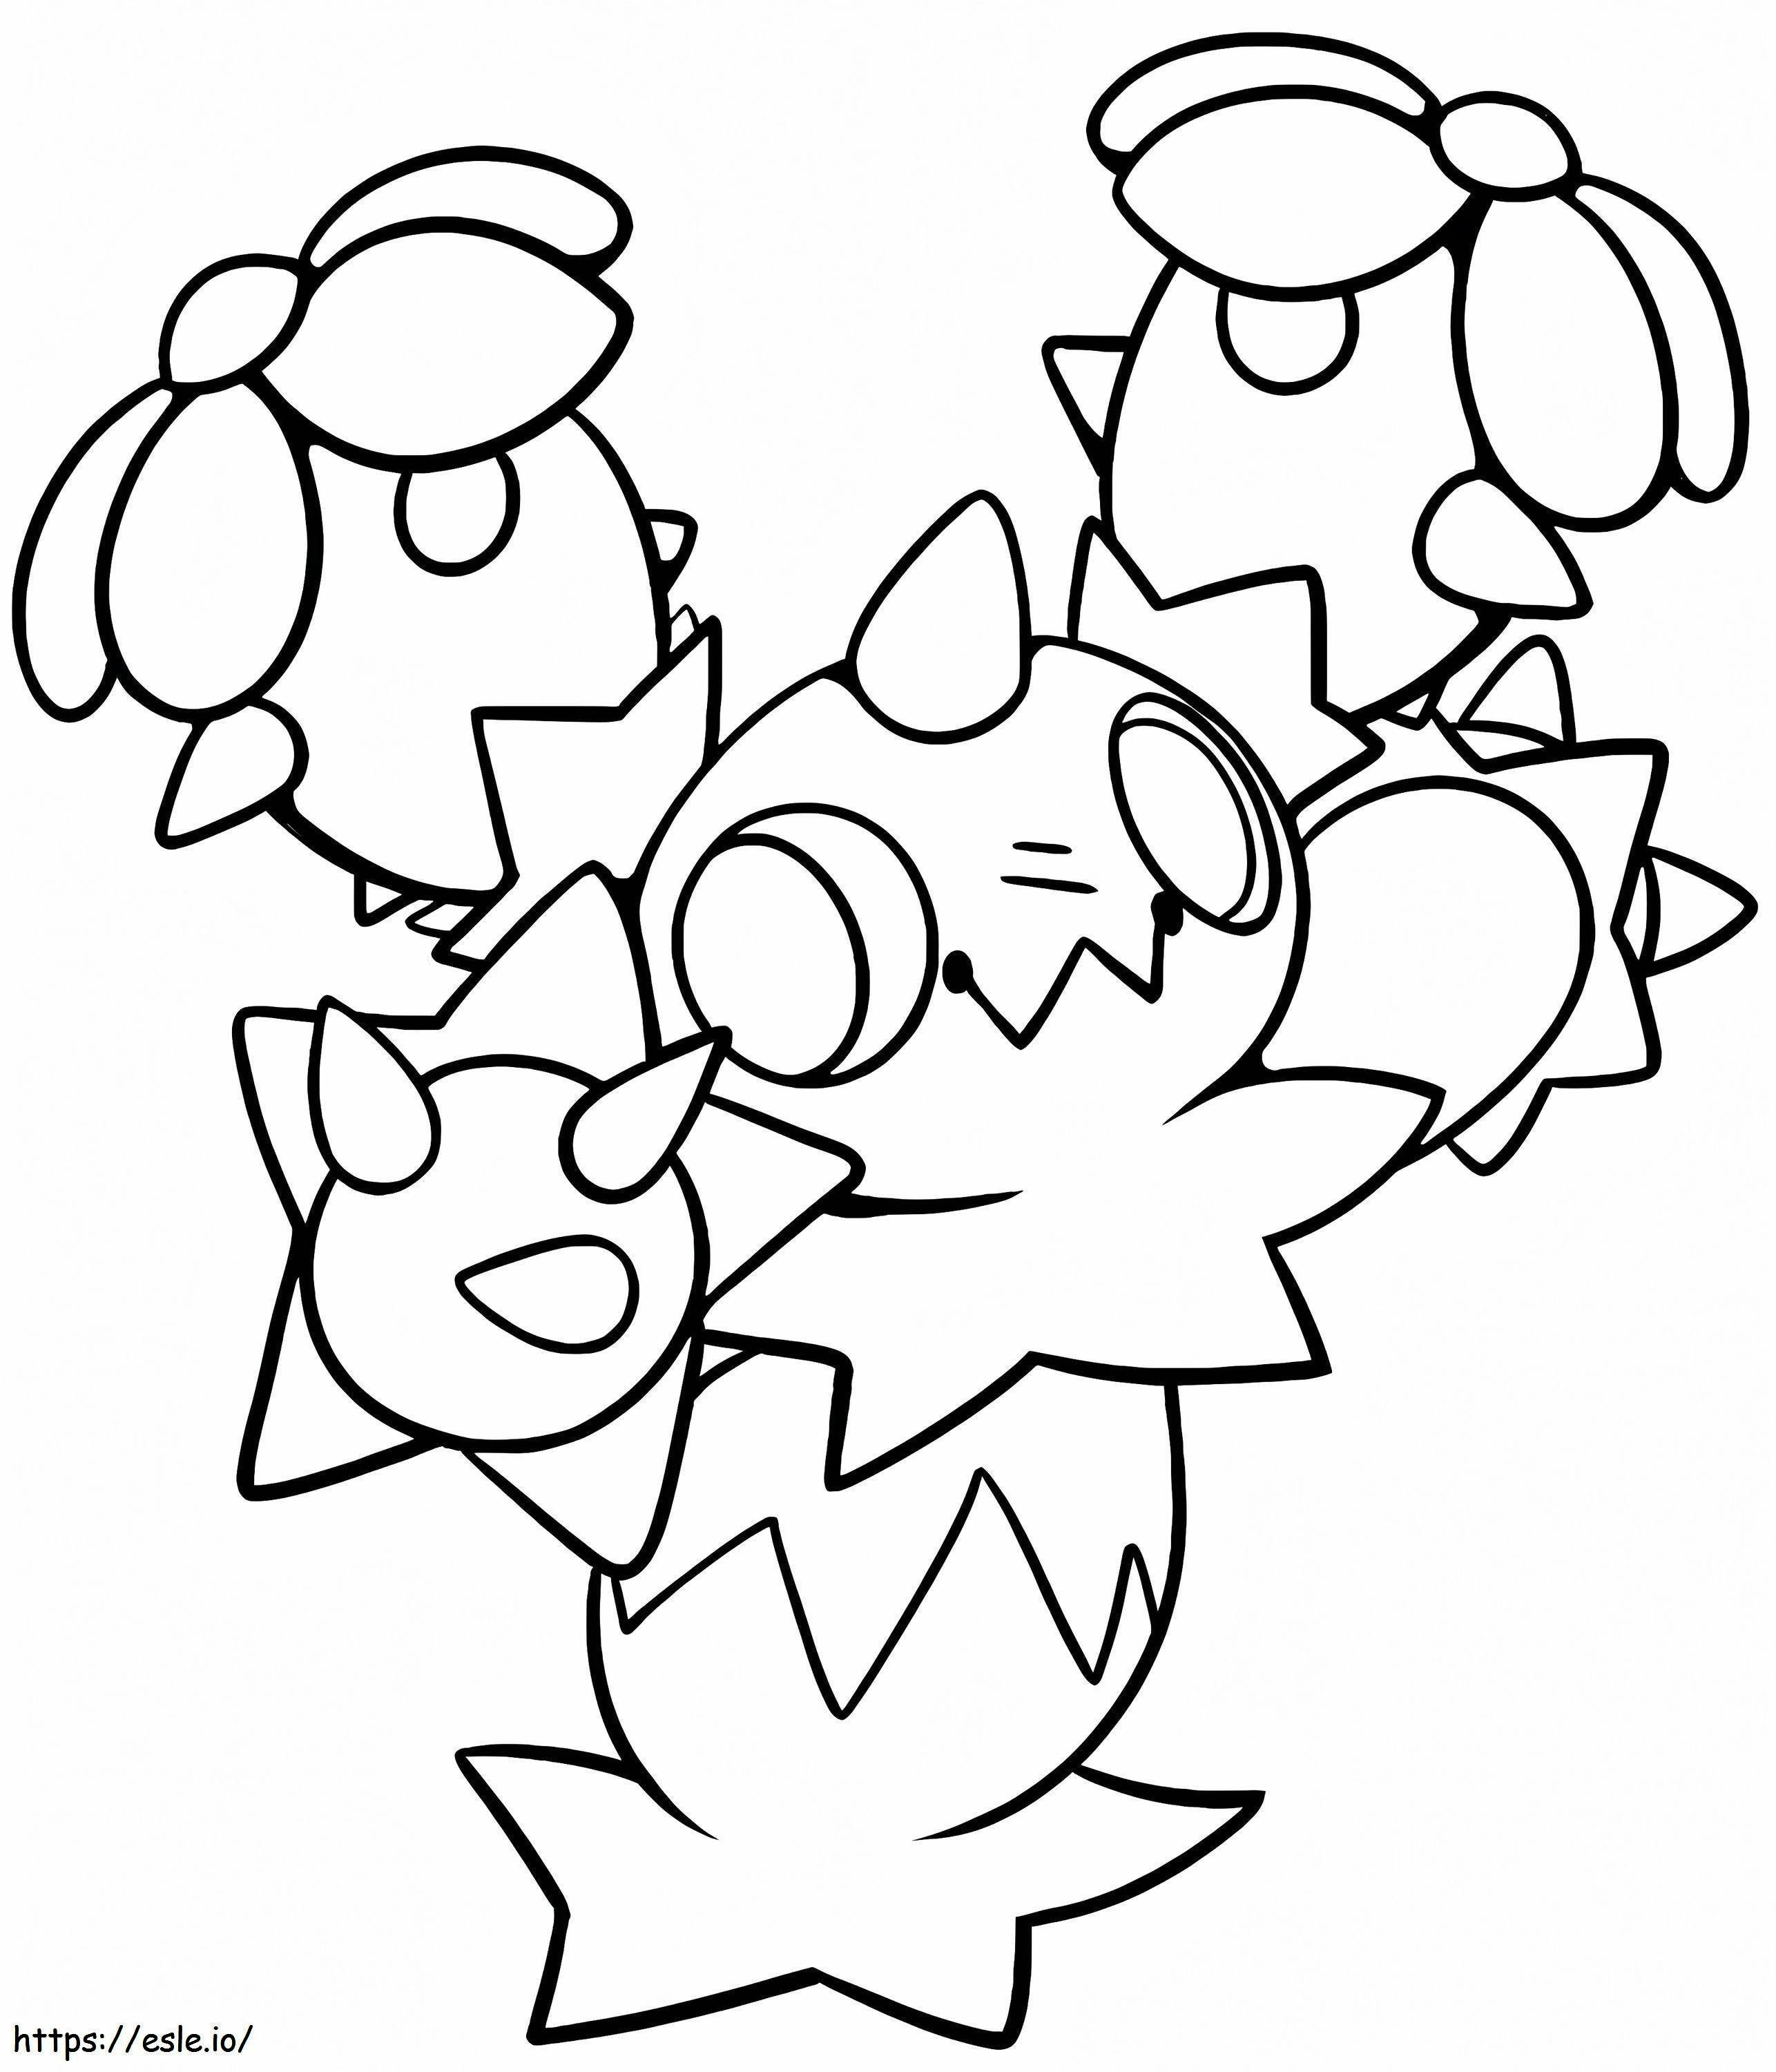 Cute Maractus Pokemon coloring page